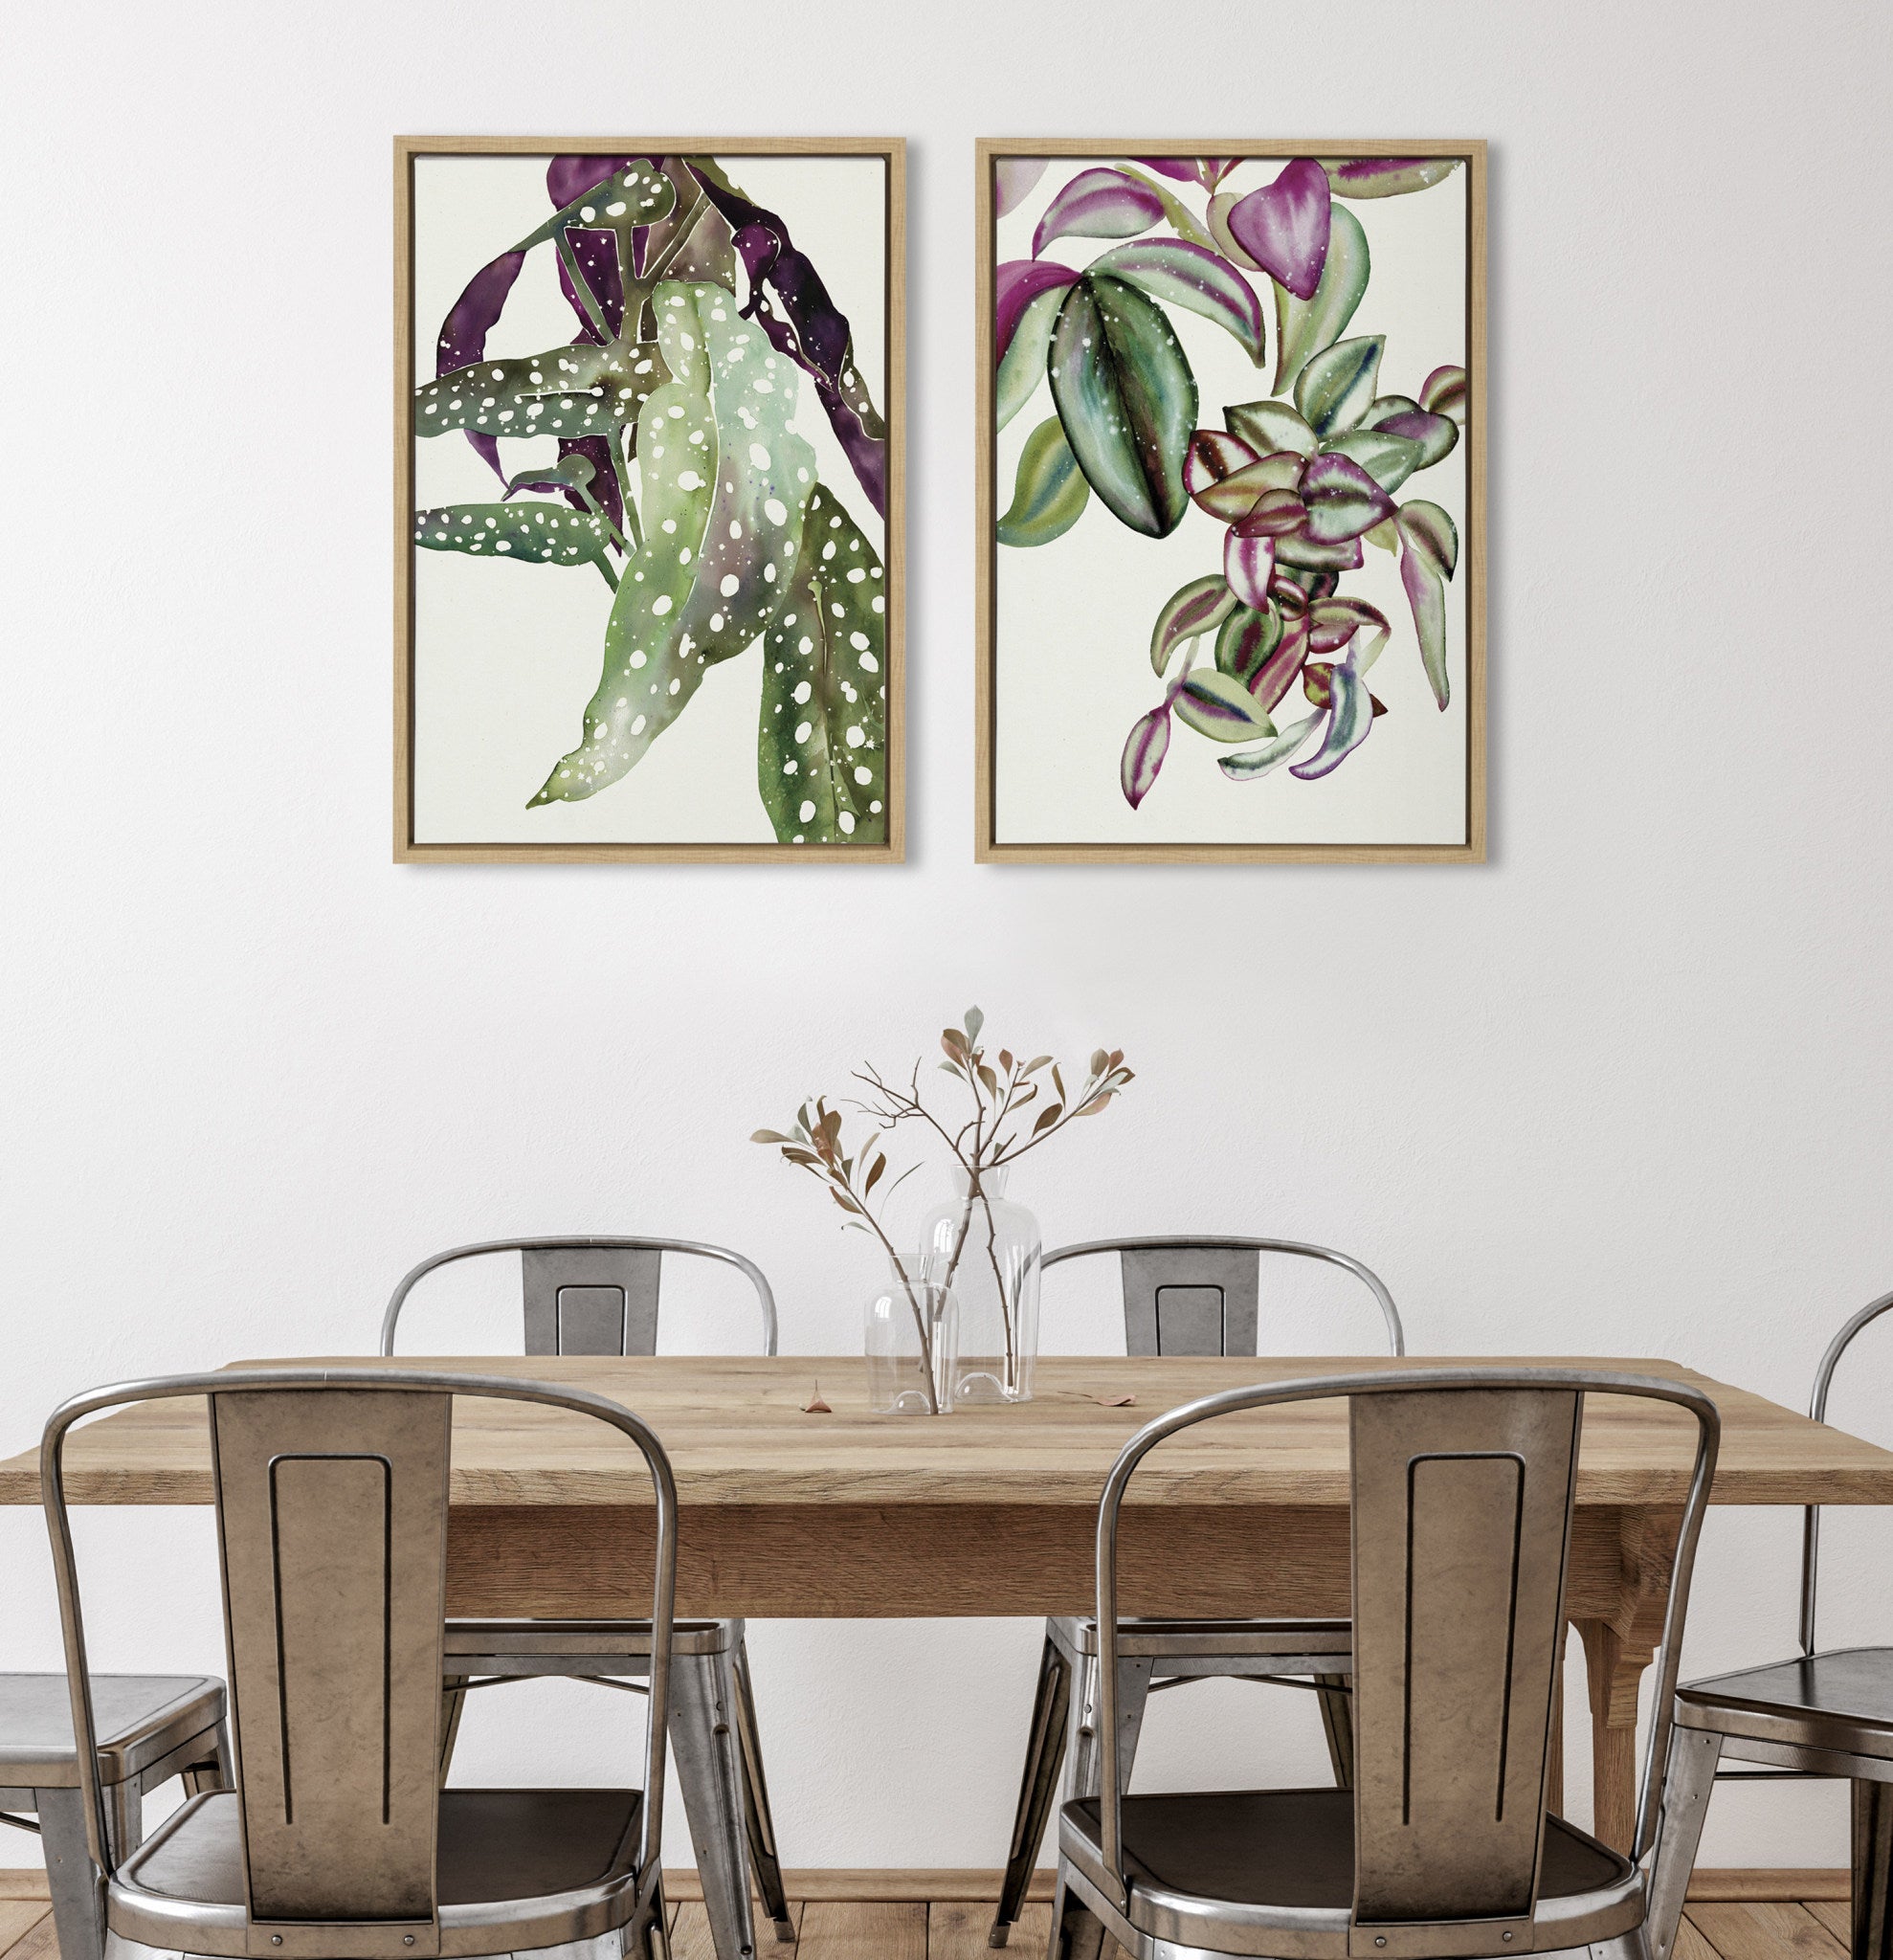 Sylvie Polka Dot Begonia and Tradescantia Framed Canvas by Ingrid Sanchez of CreativeIngrid